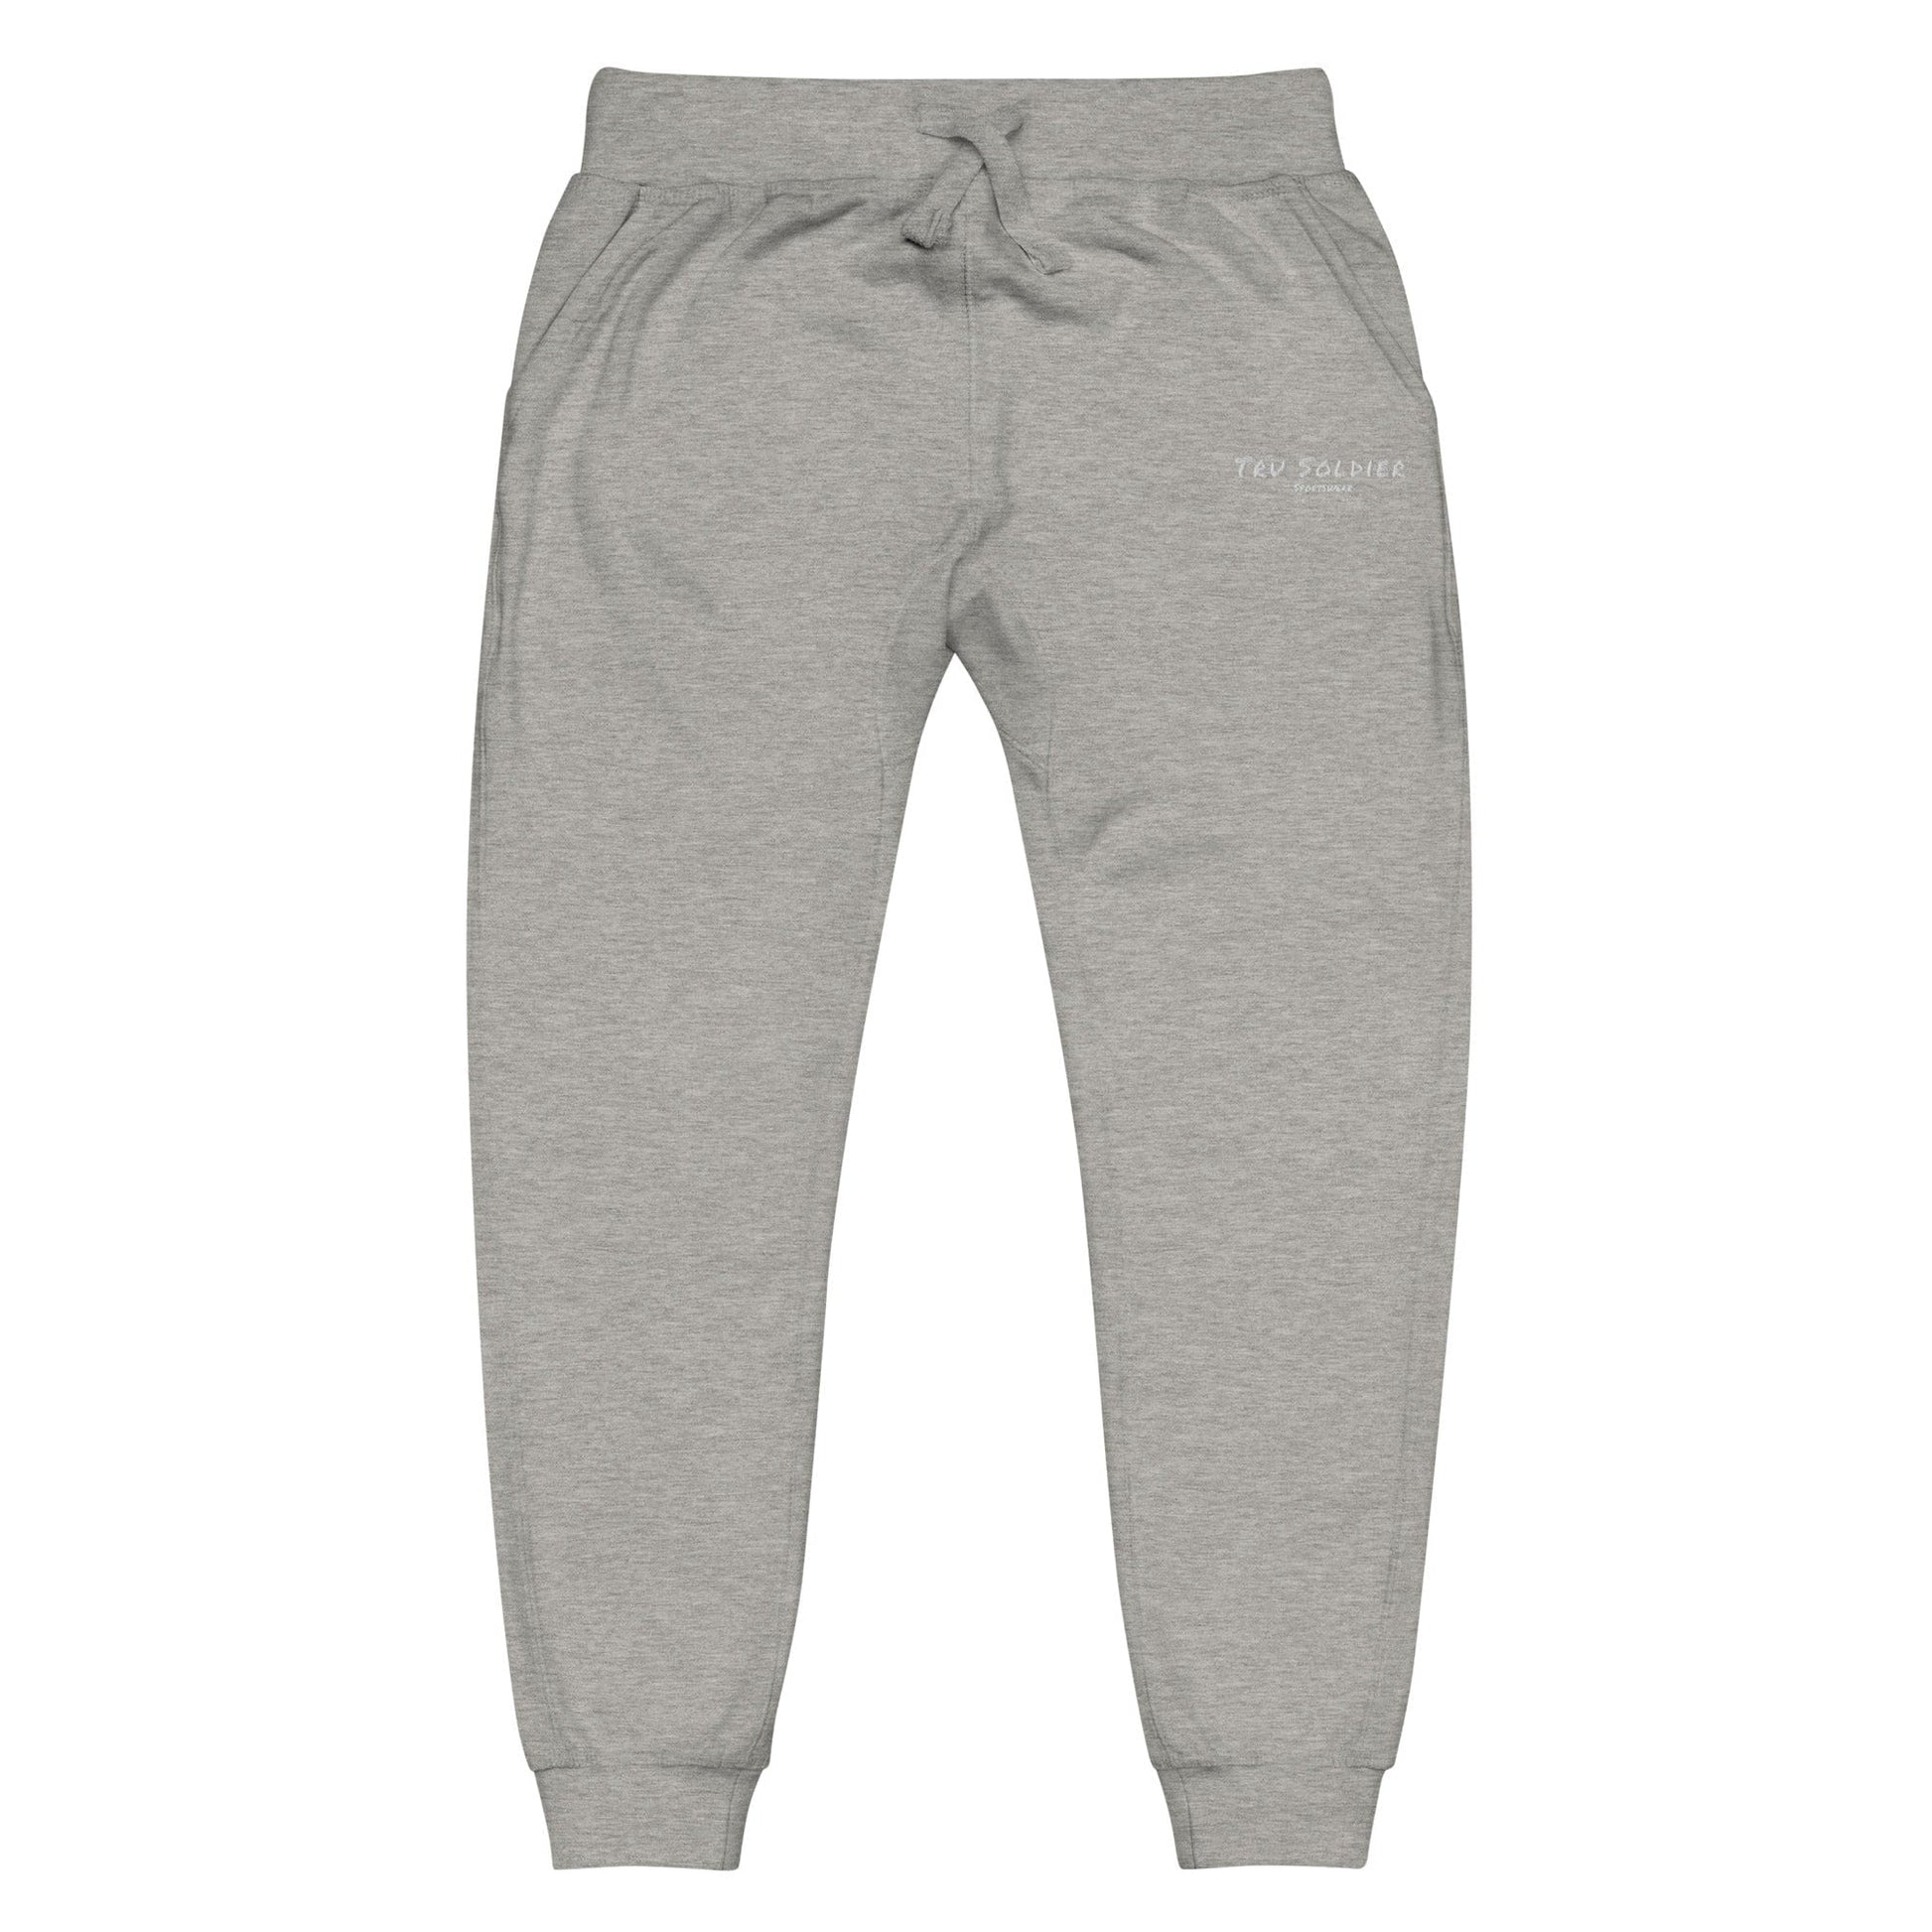 Tru Soldier Sportswear  Carbon Grey / XS Unisex Signature fleece joggers